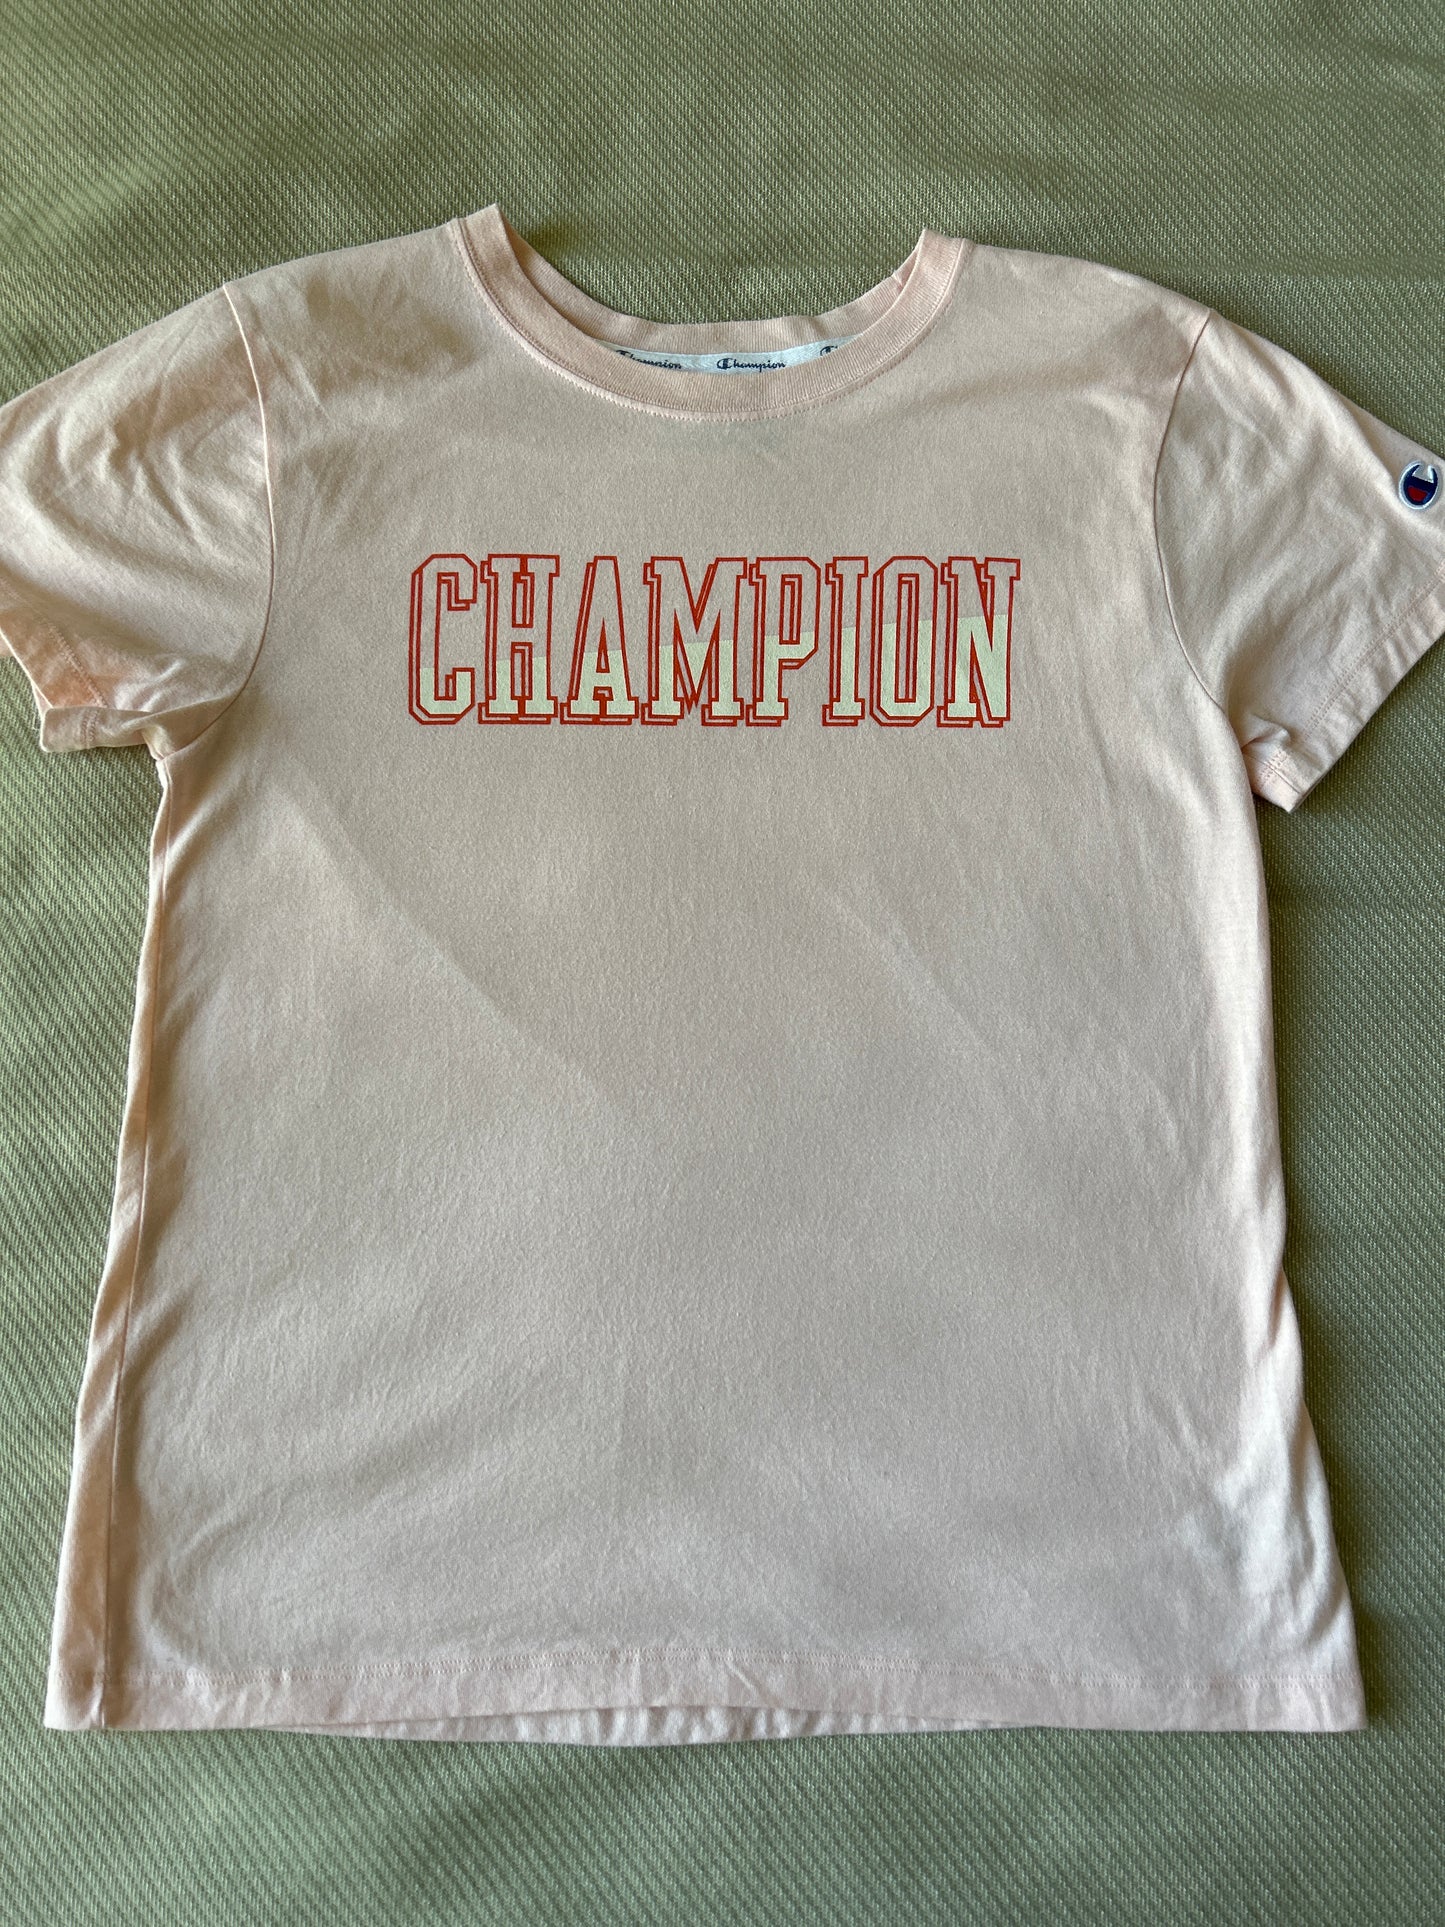 Champion/Women’s T-Shirt/Size S